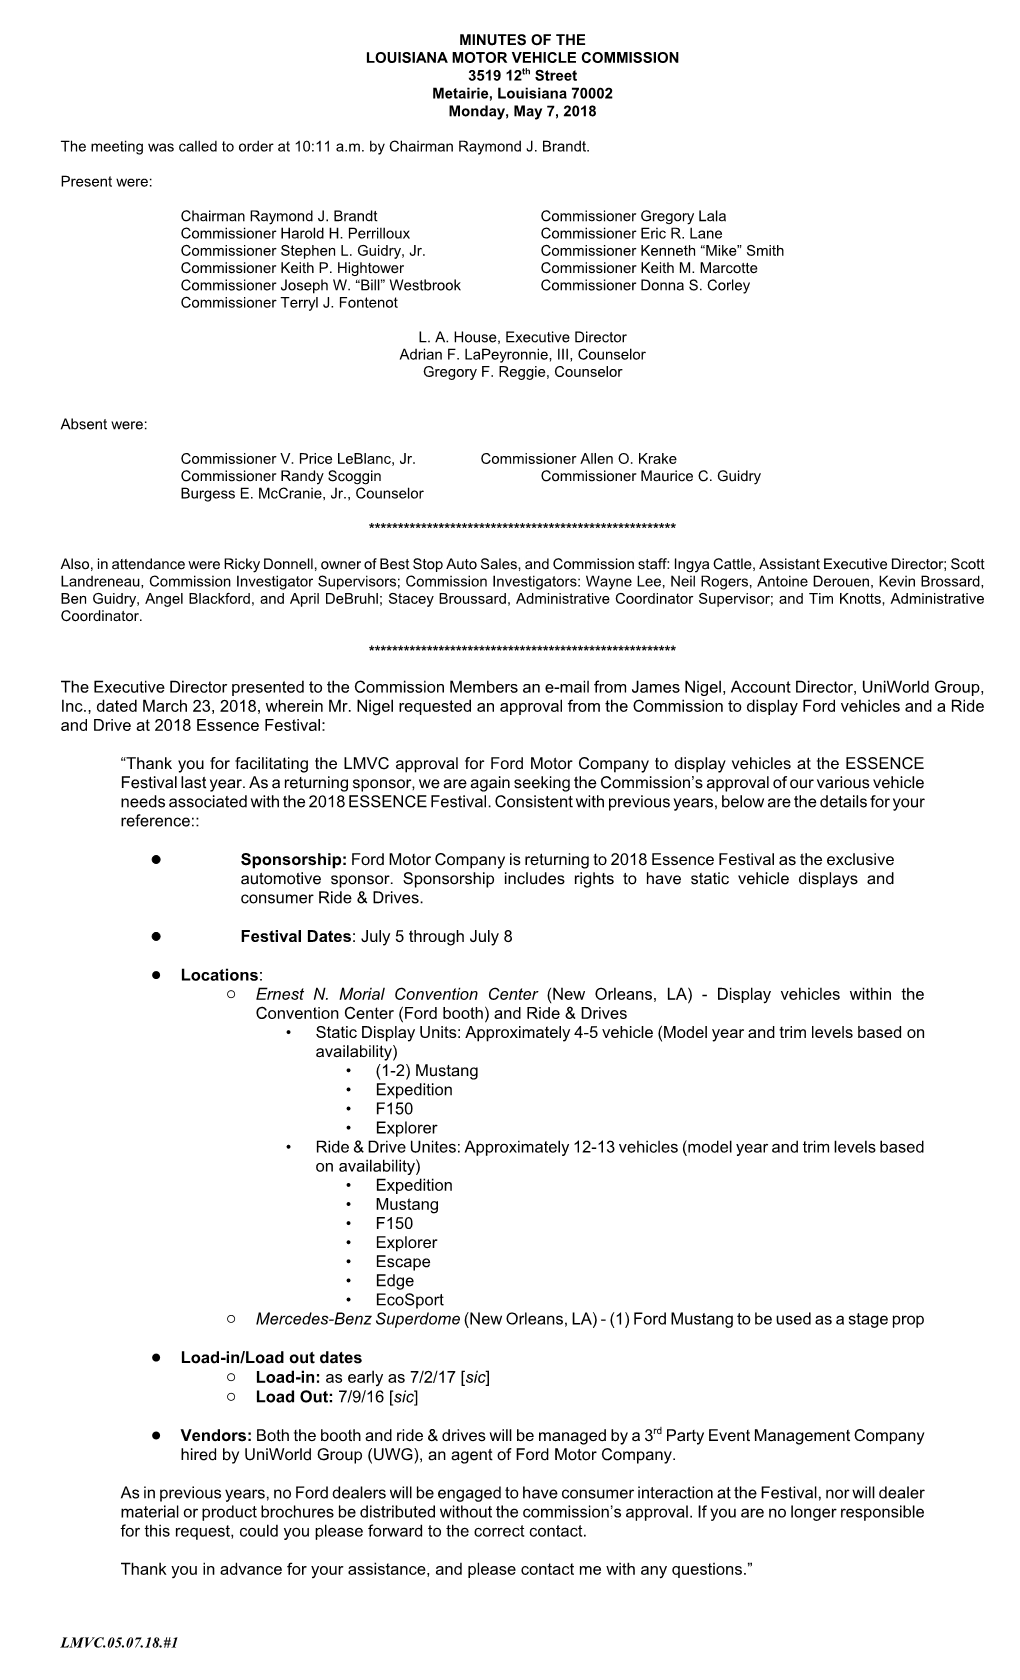 Louisiana Motor Vehicle Commission Minutes